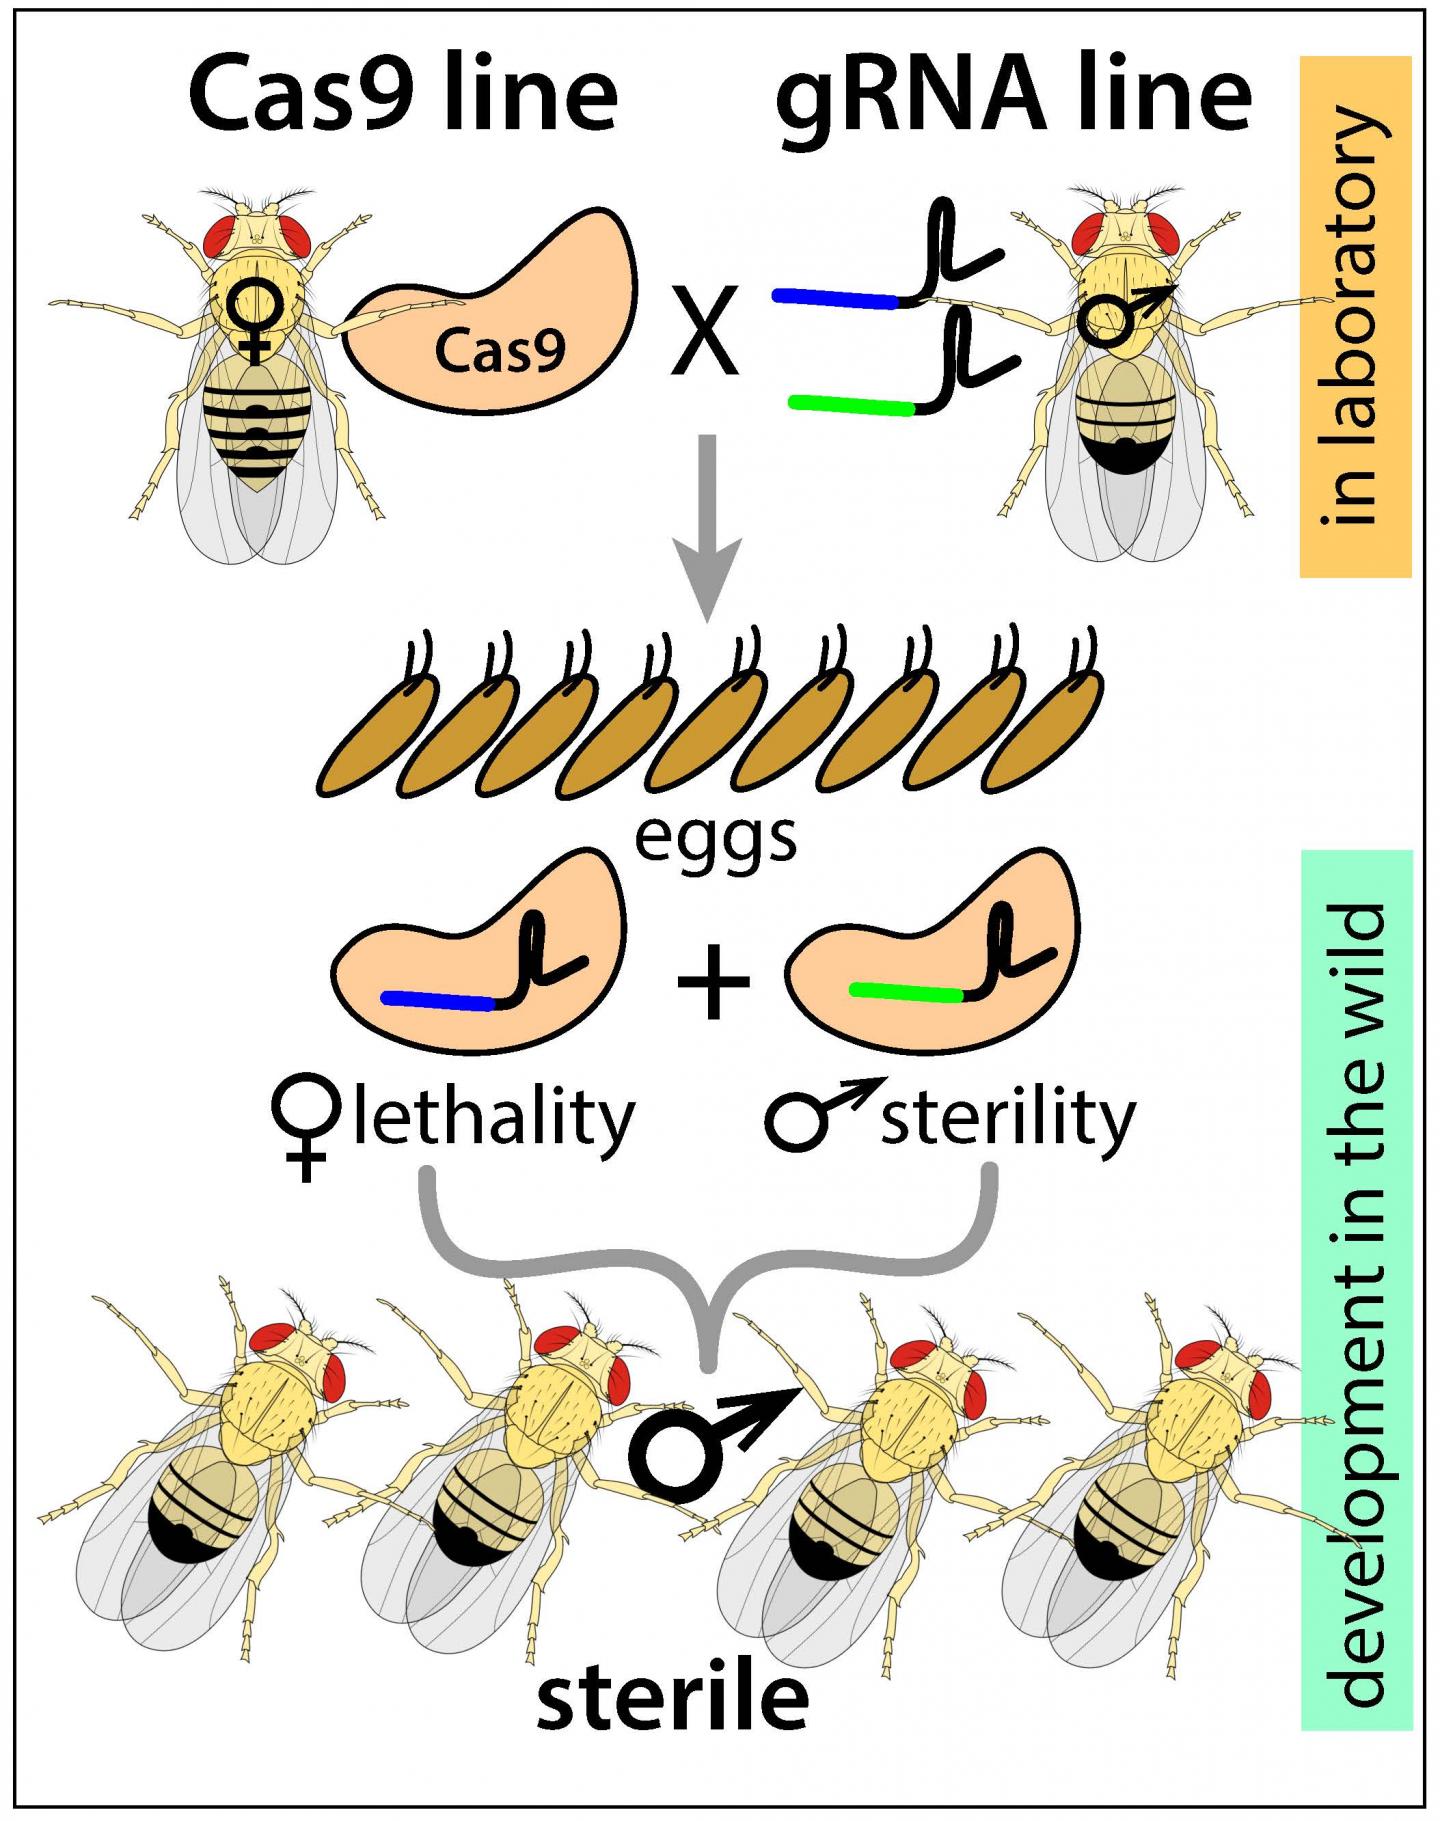 pgSIT-Drosophila